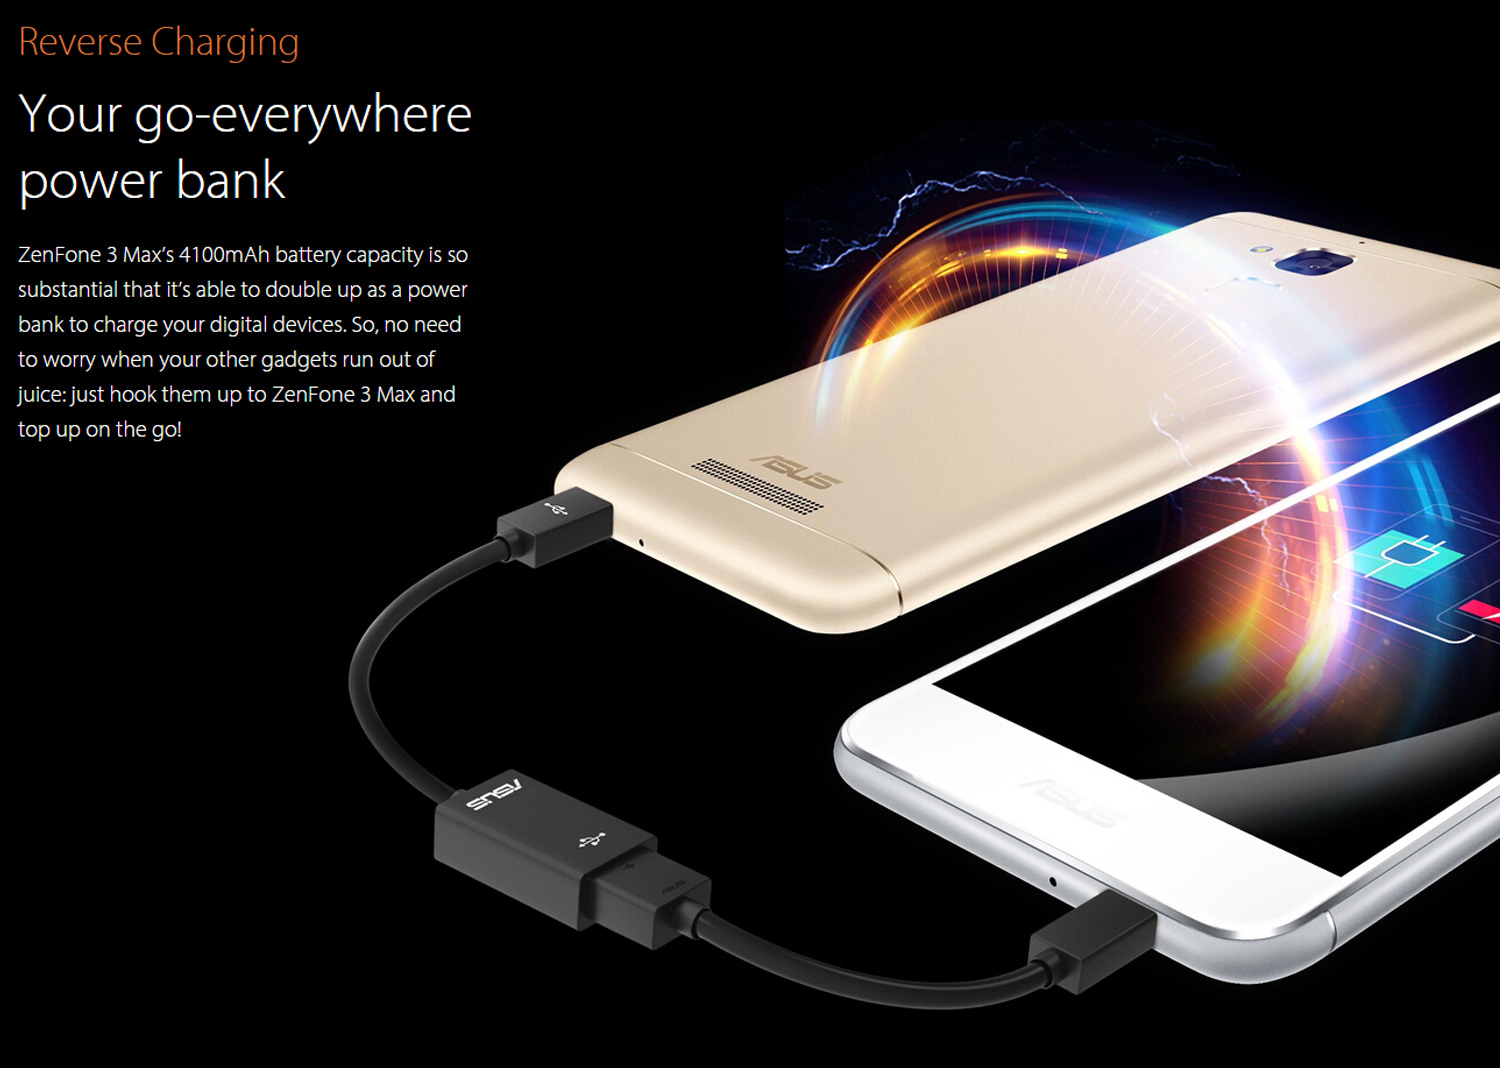 Asus ZenFone 3 Max as a Power Bank